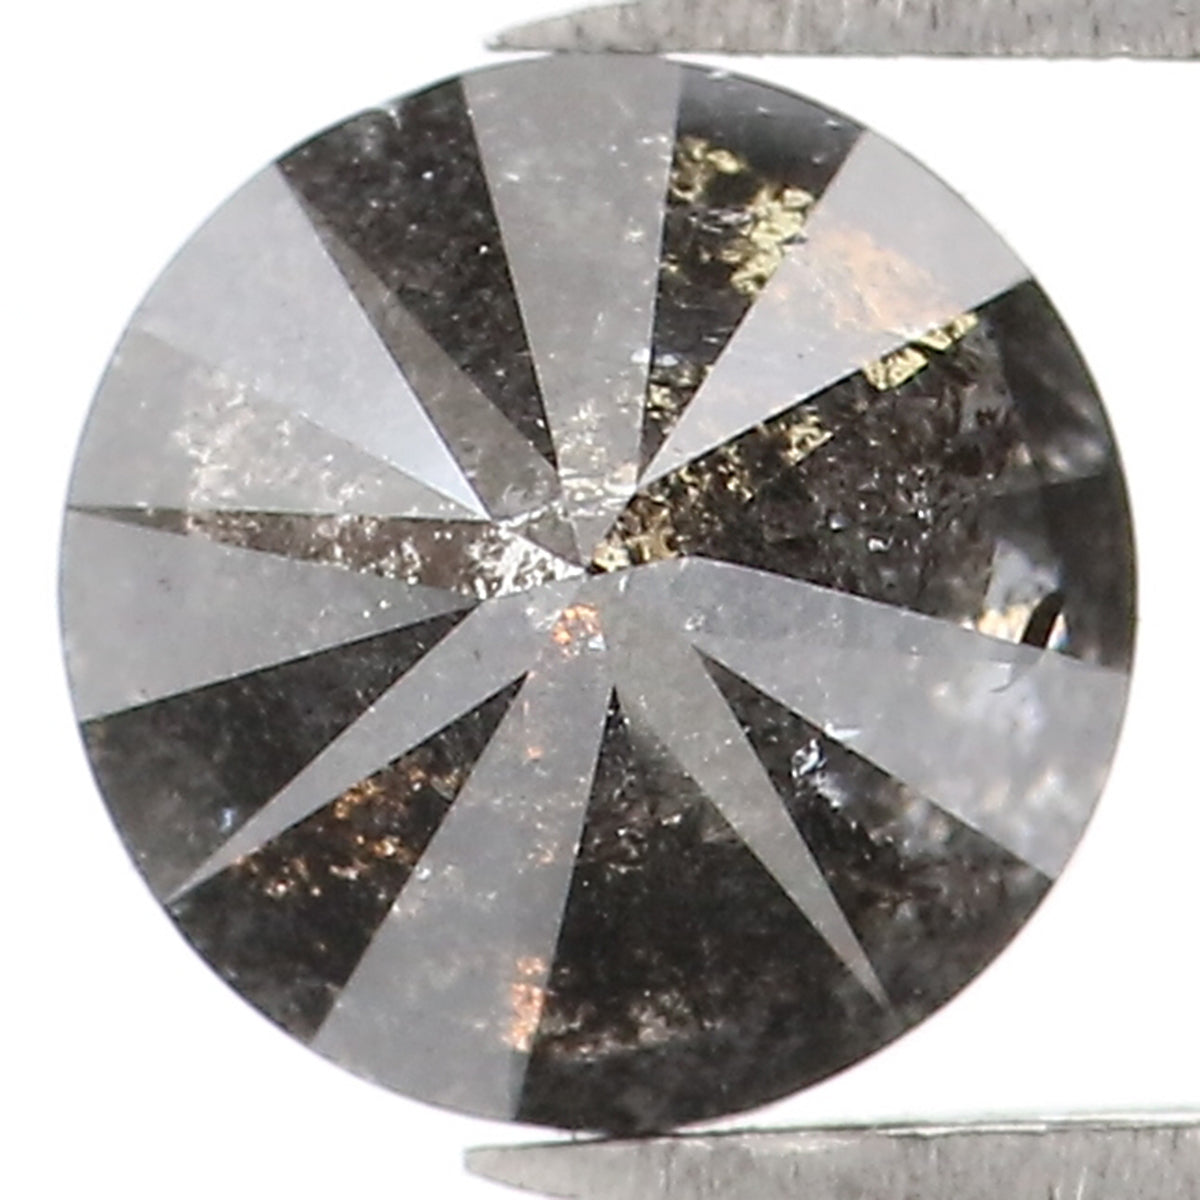 Natural Loose Round Salt And Pepper Diamond Black Grey Color 0.92 CT 5.95 MM Round Brilliant Cut Diamond L1523